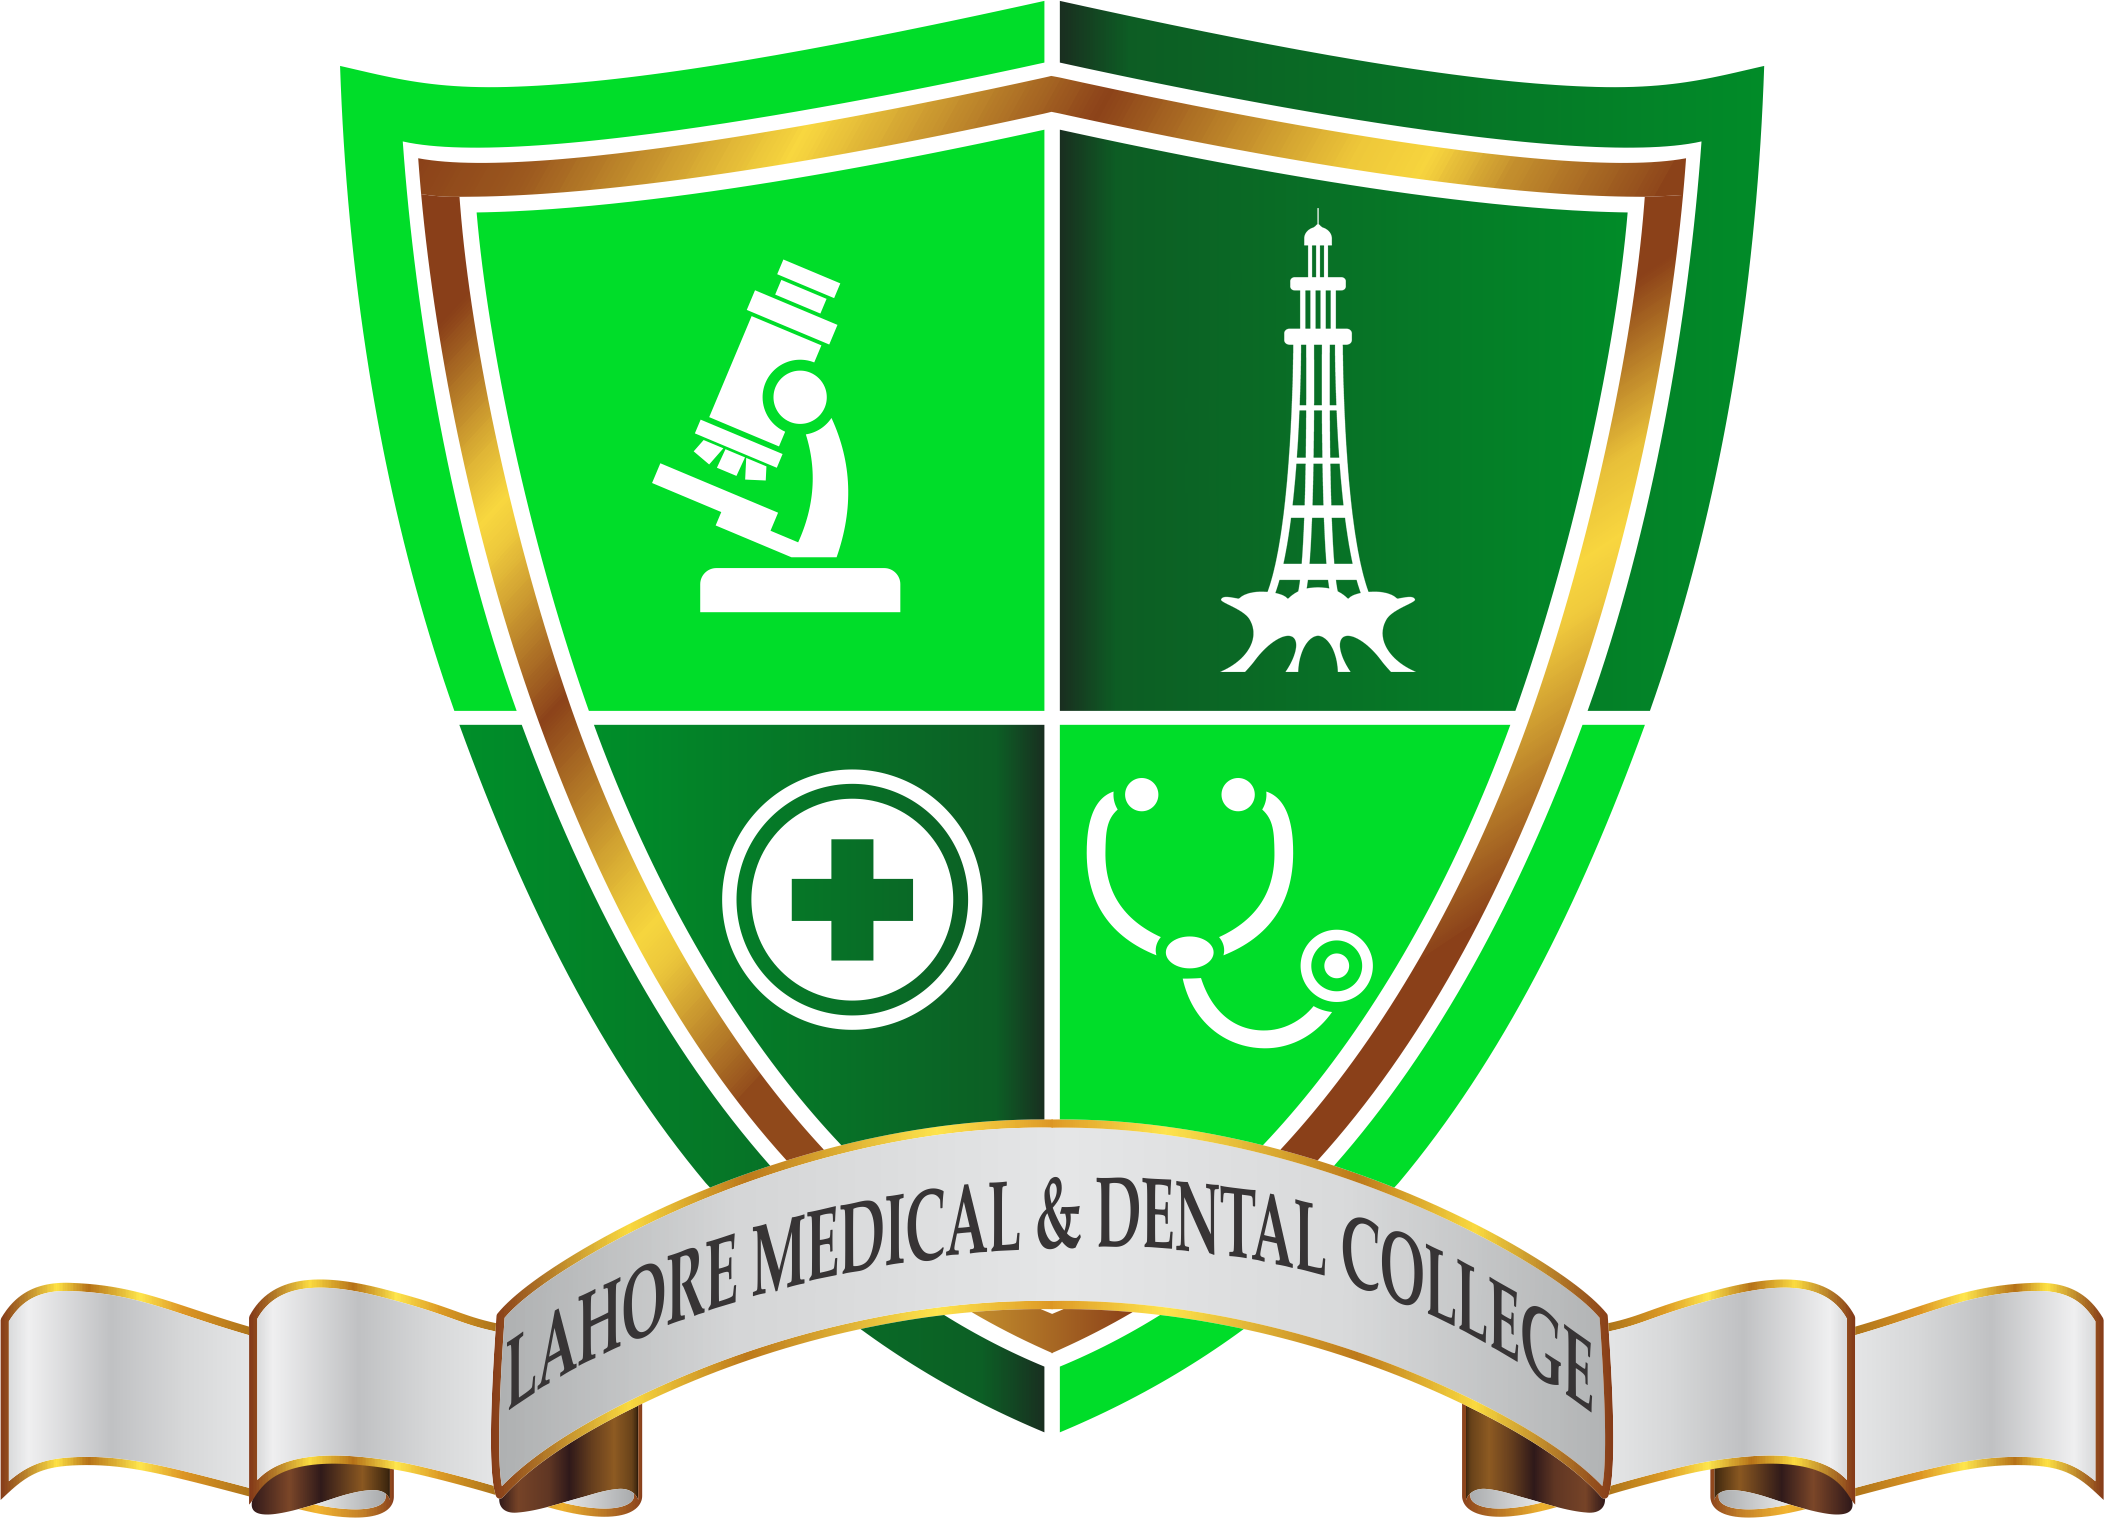 Lahore Medical & Dental College Reviews